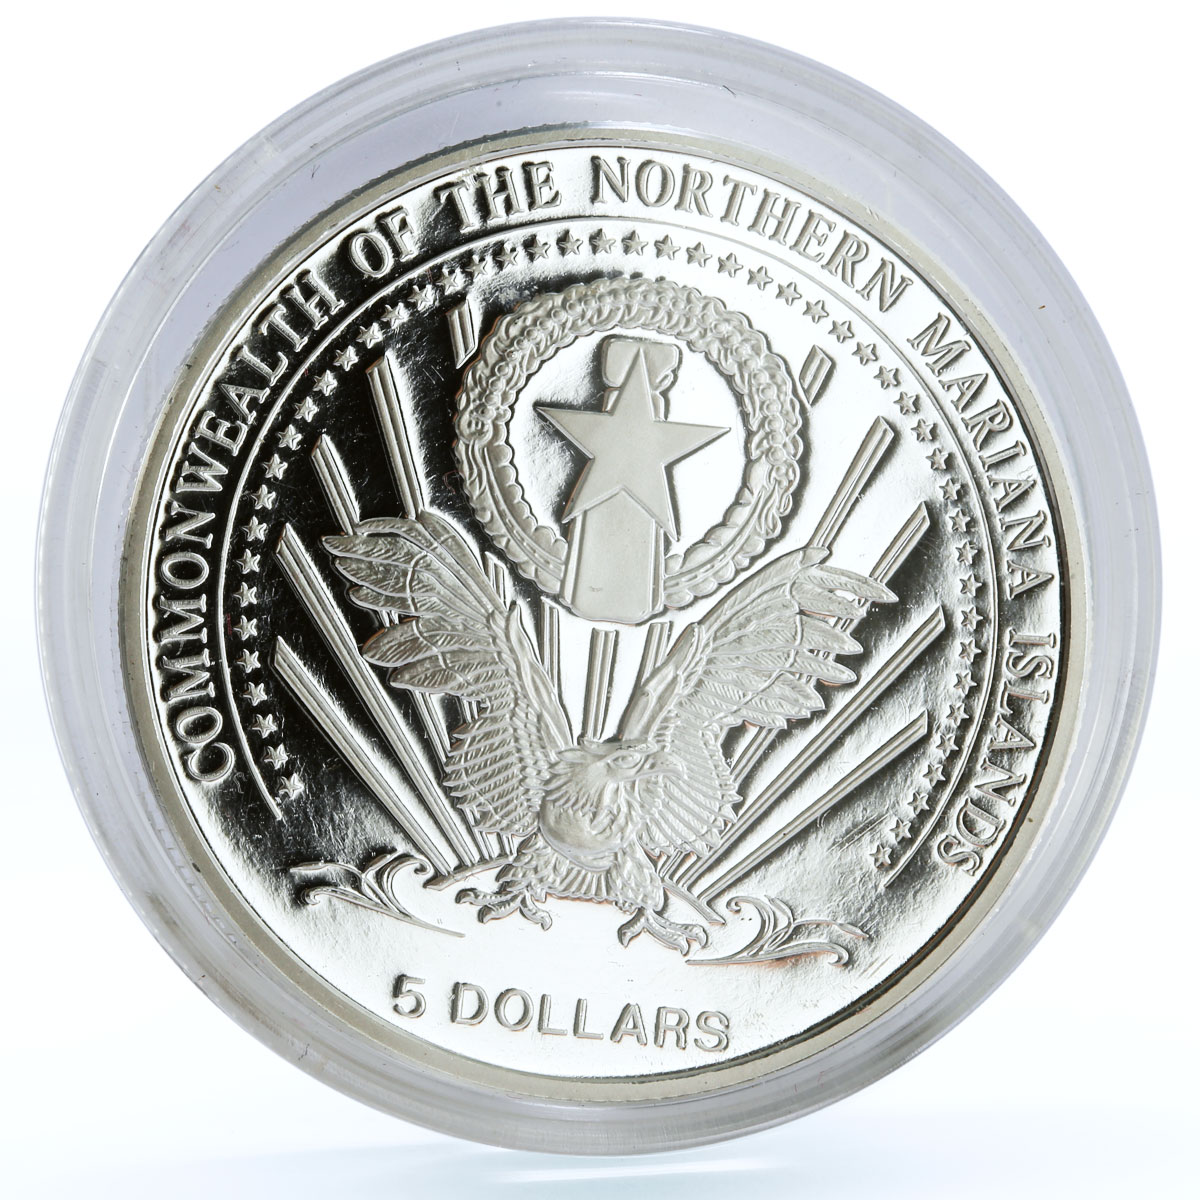 Mariana Islands 5 dollars Marine Life Protection Pearl Diving silver coin 2005